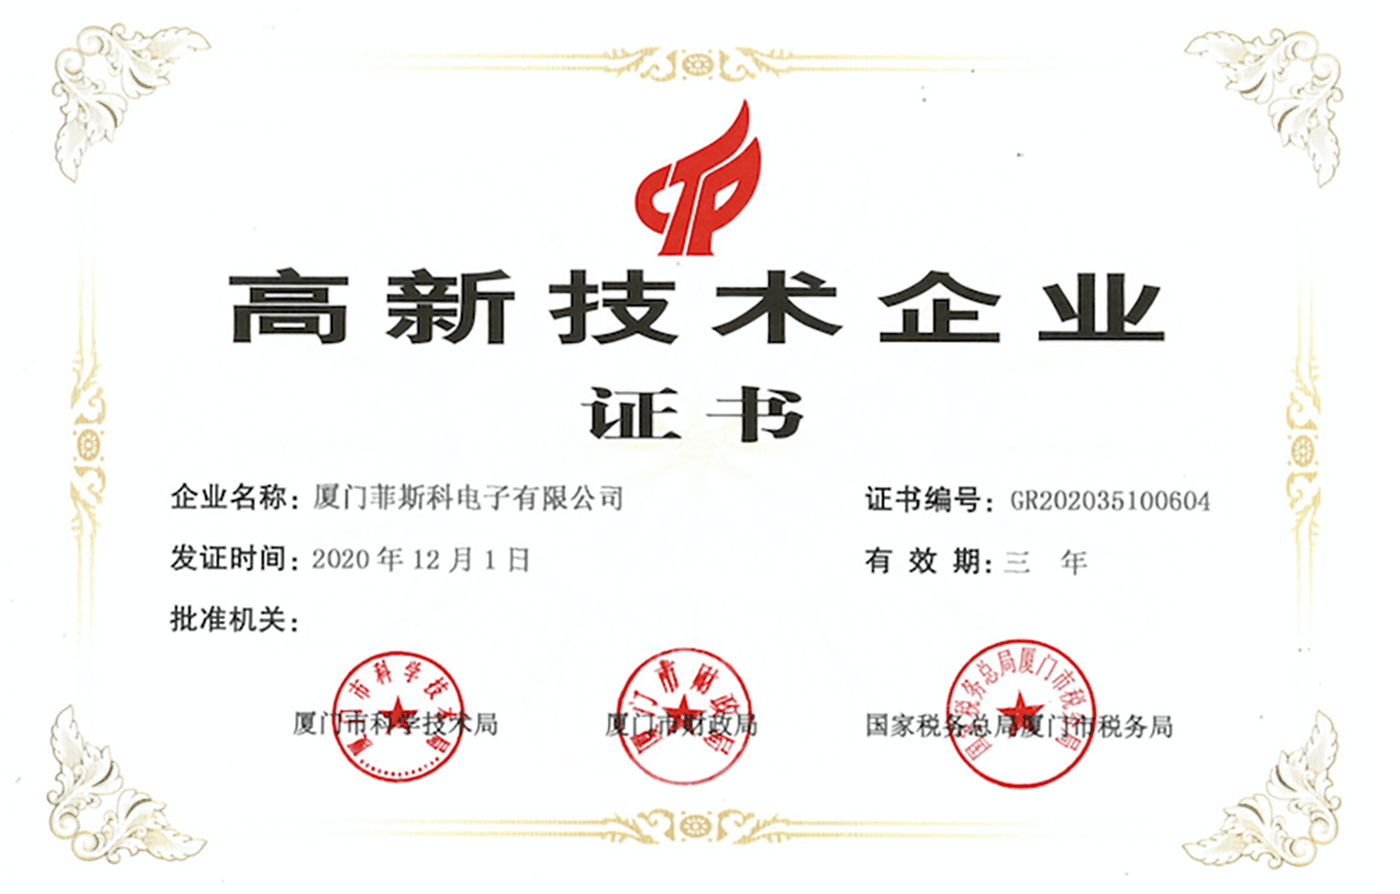 Zertifikat für High-Tech-Unternehmen.png